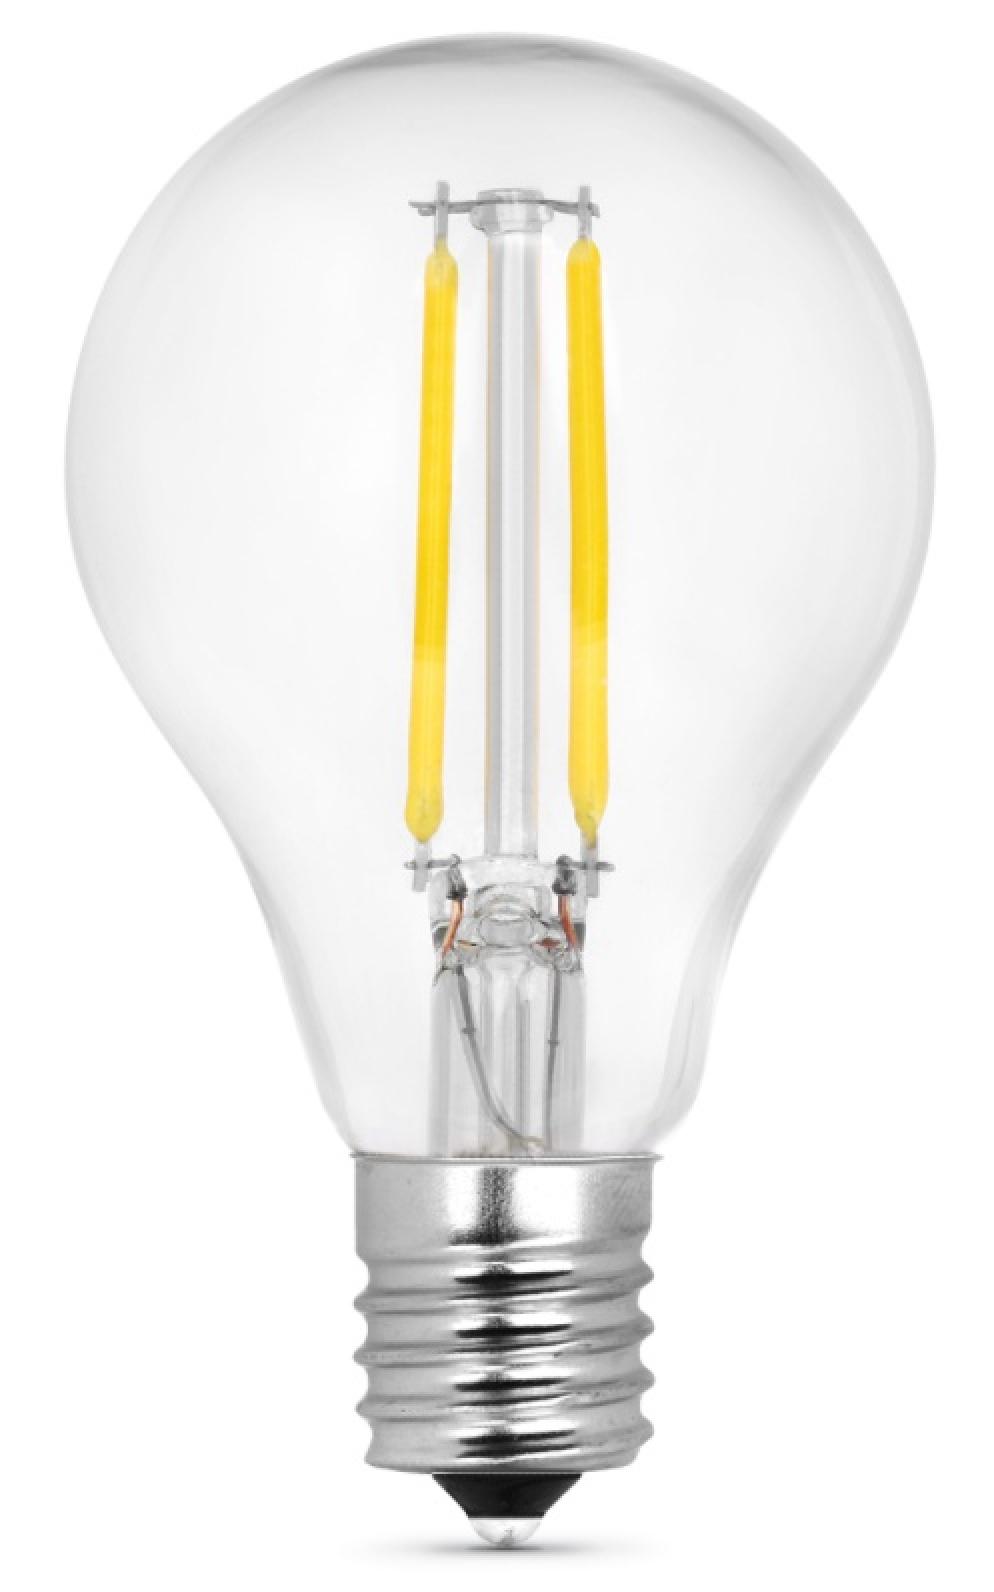 Feit Electric LED 40 Watt Equivalent 300 Lumen A15 Intermediate Dimmable Light Bulb (2 Pack)